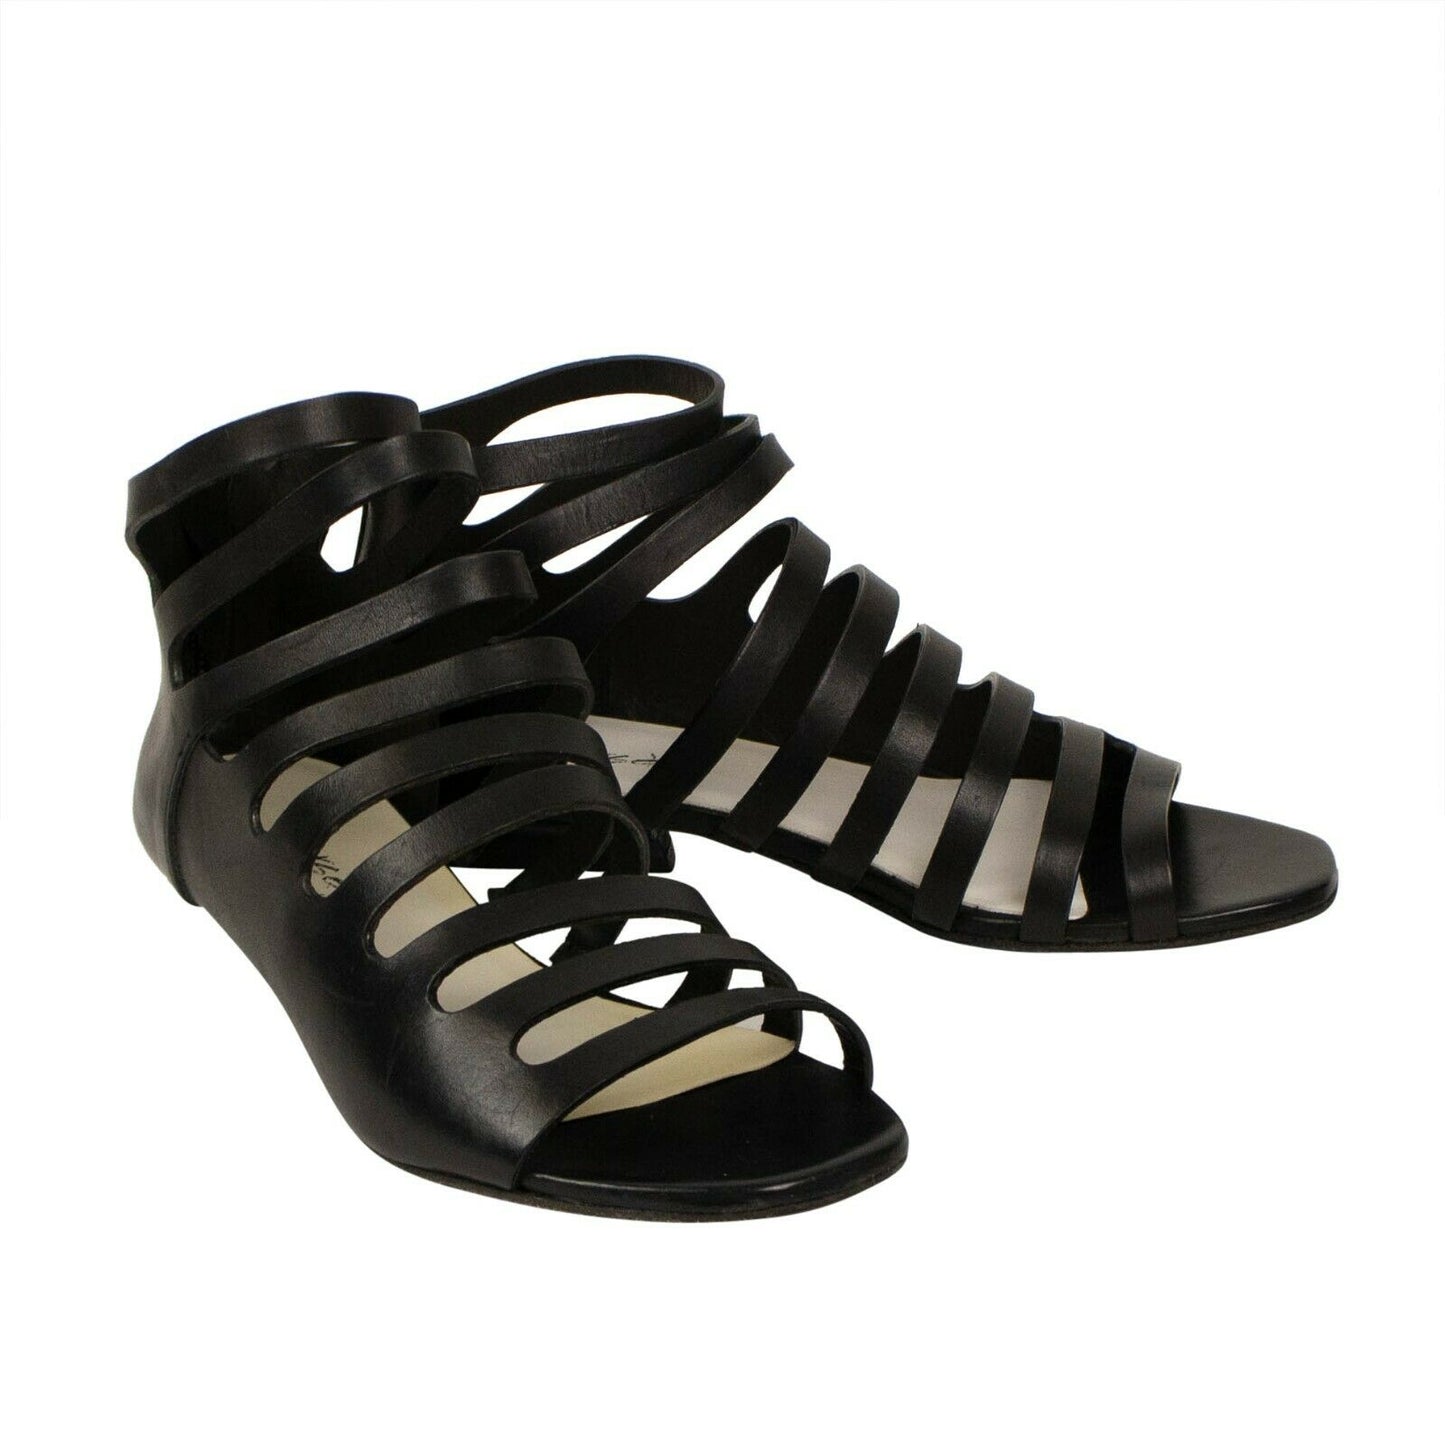 Marsell 'Sandaletto' Calf Skin Leather Heels Sandals - Black